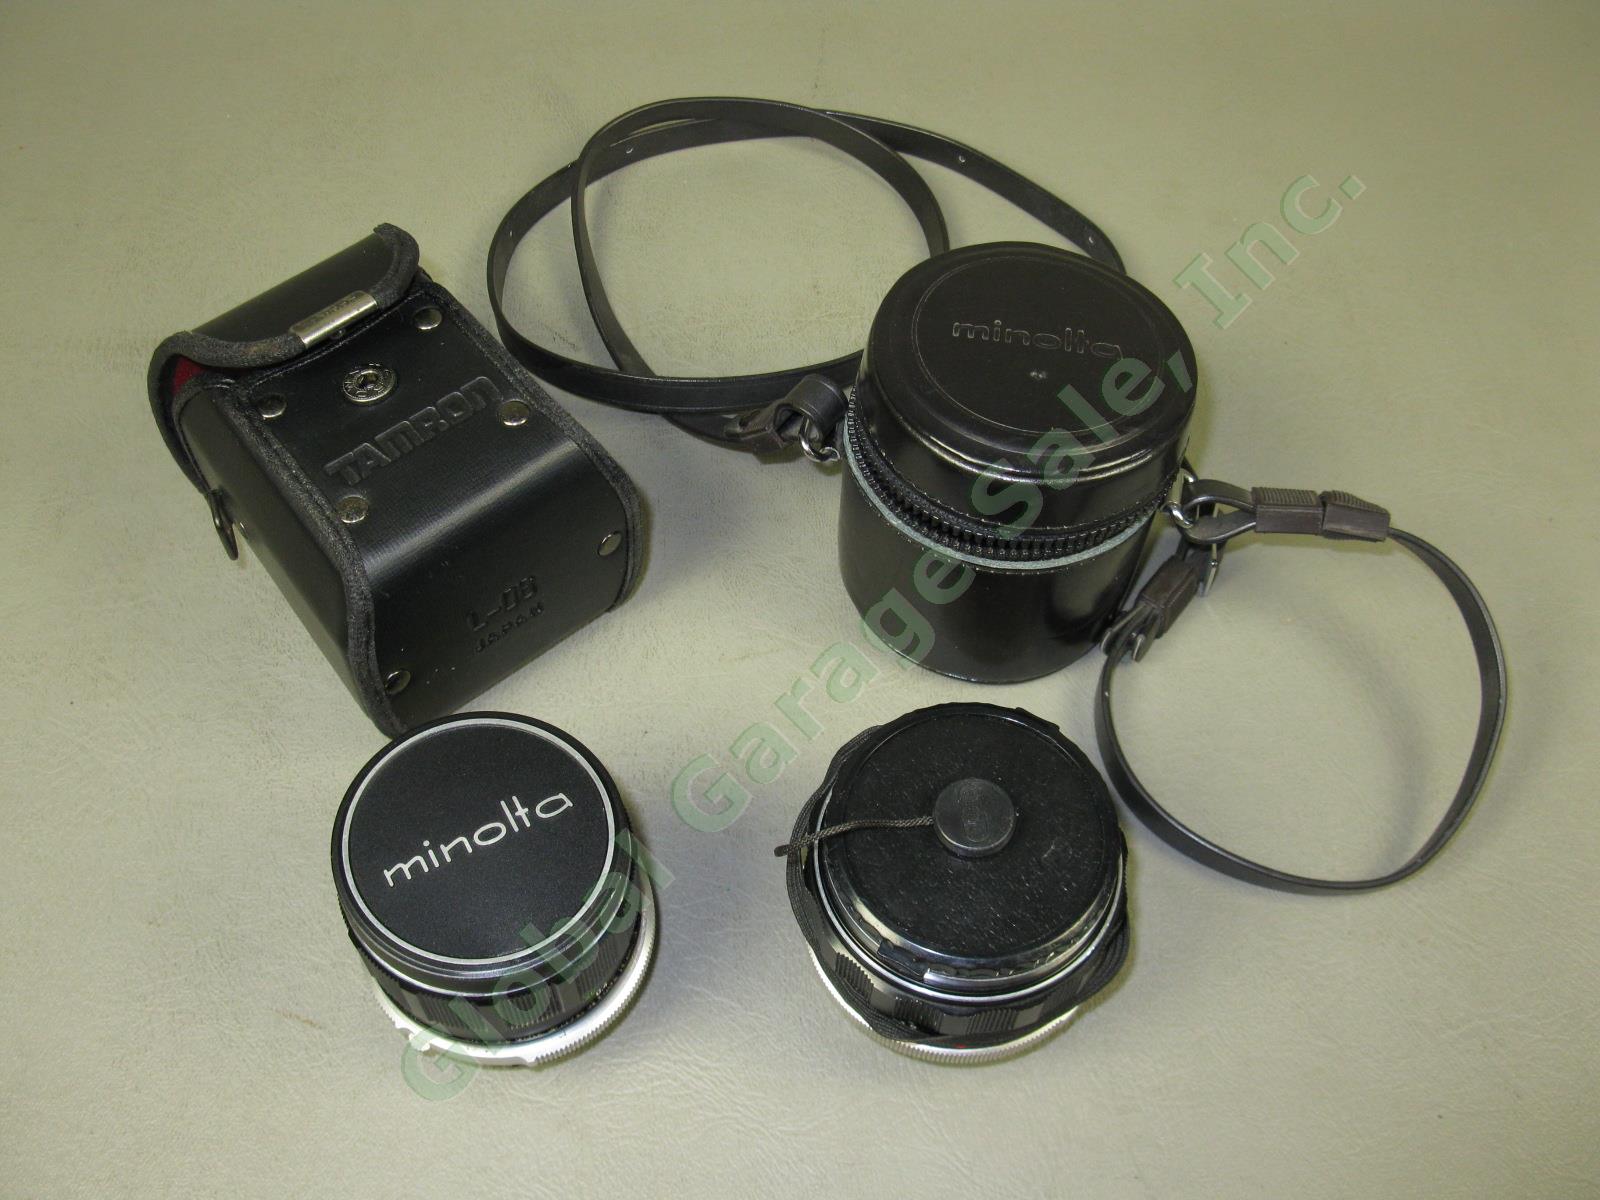 2 Minolta Camera Lens Lot Case Bundle MC W Rokkor-HG 2.8 35mm PF 1.4 58mm Tamron